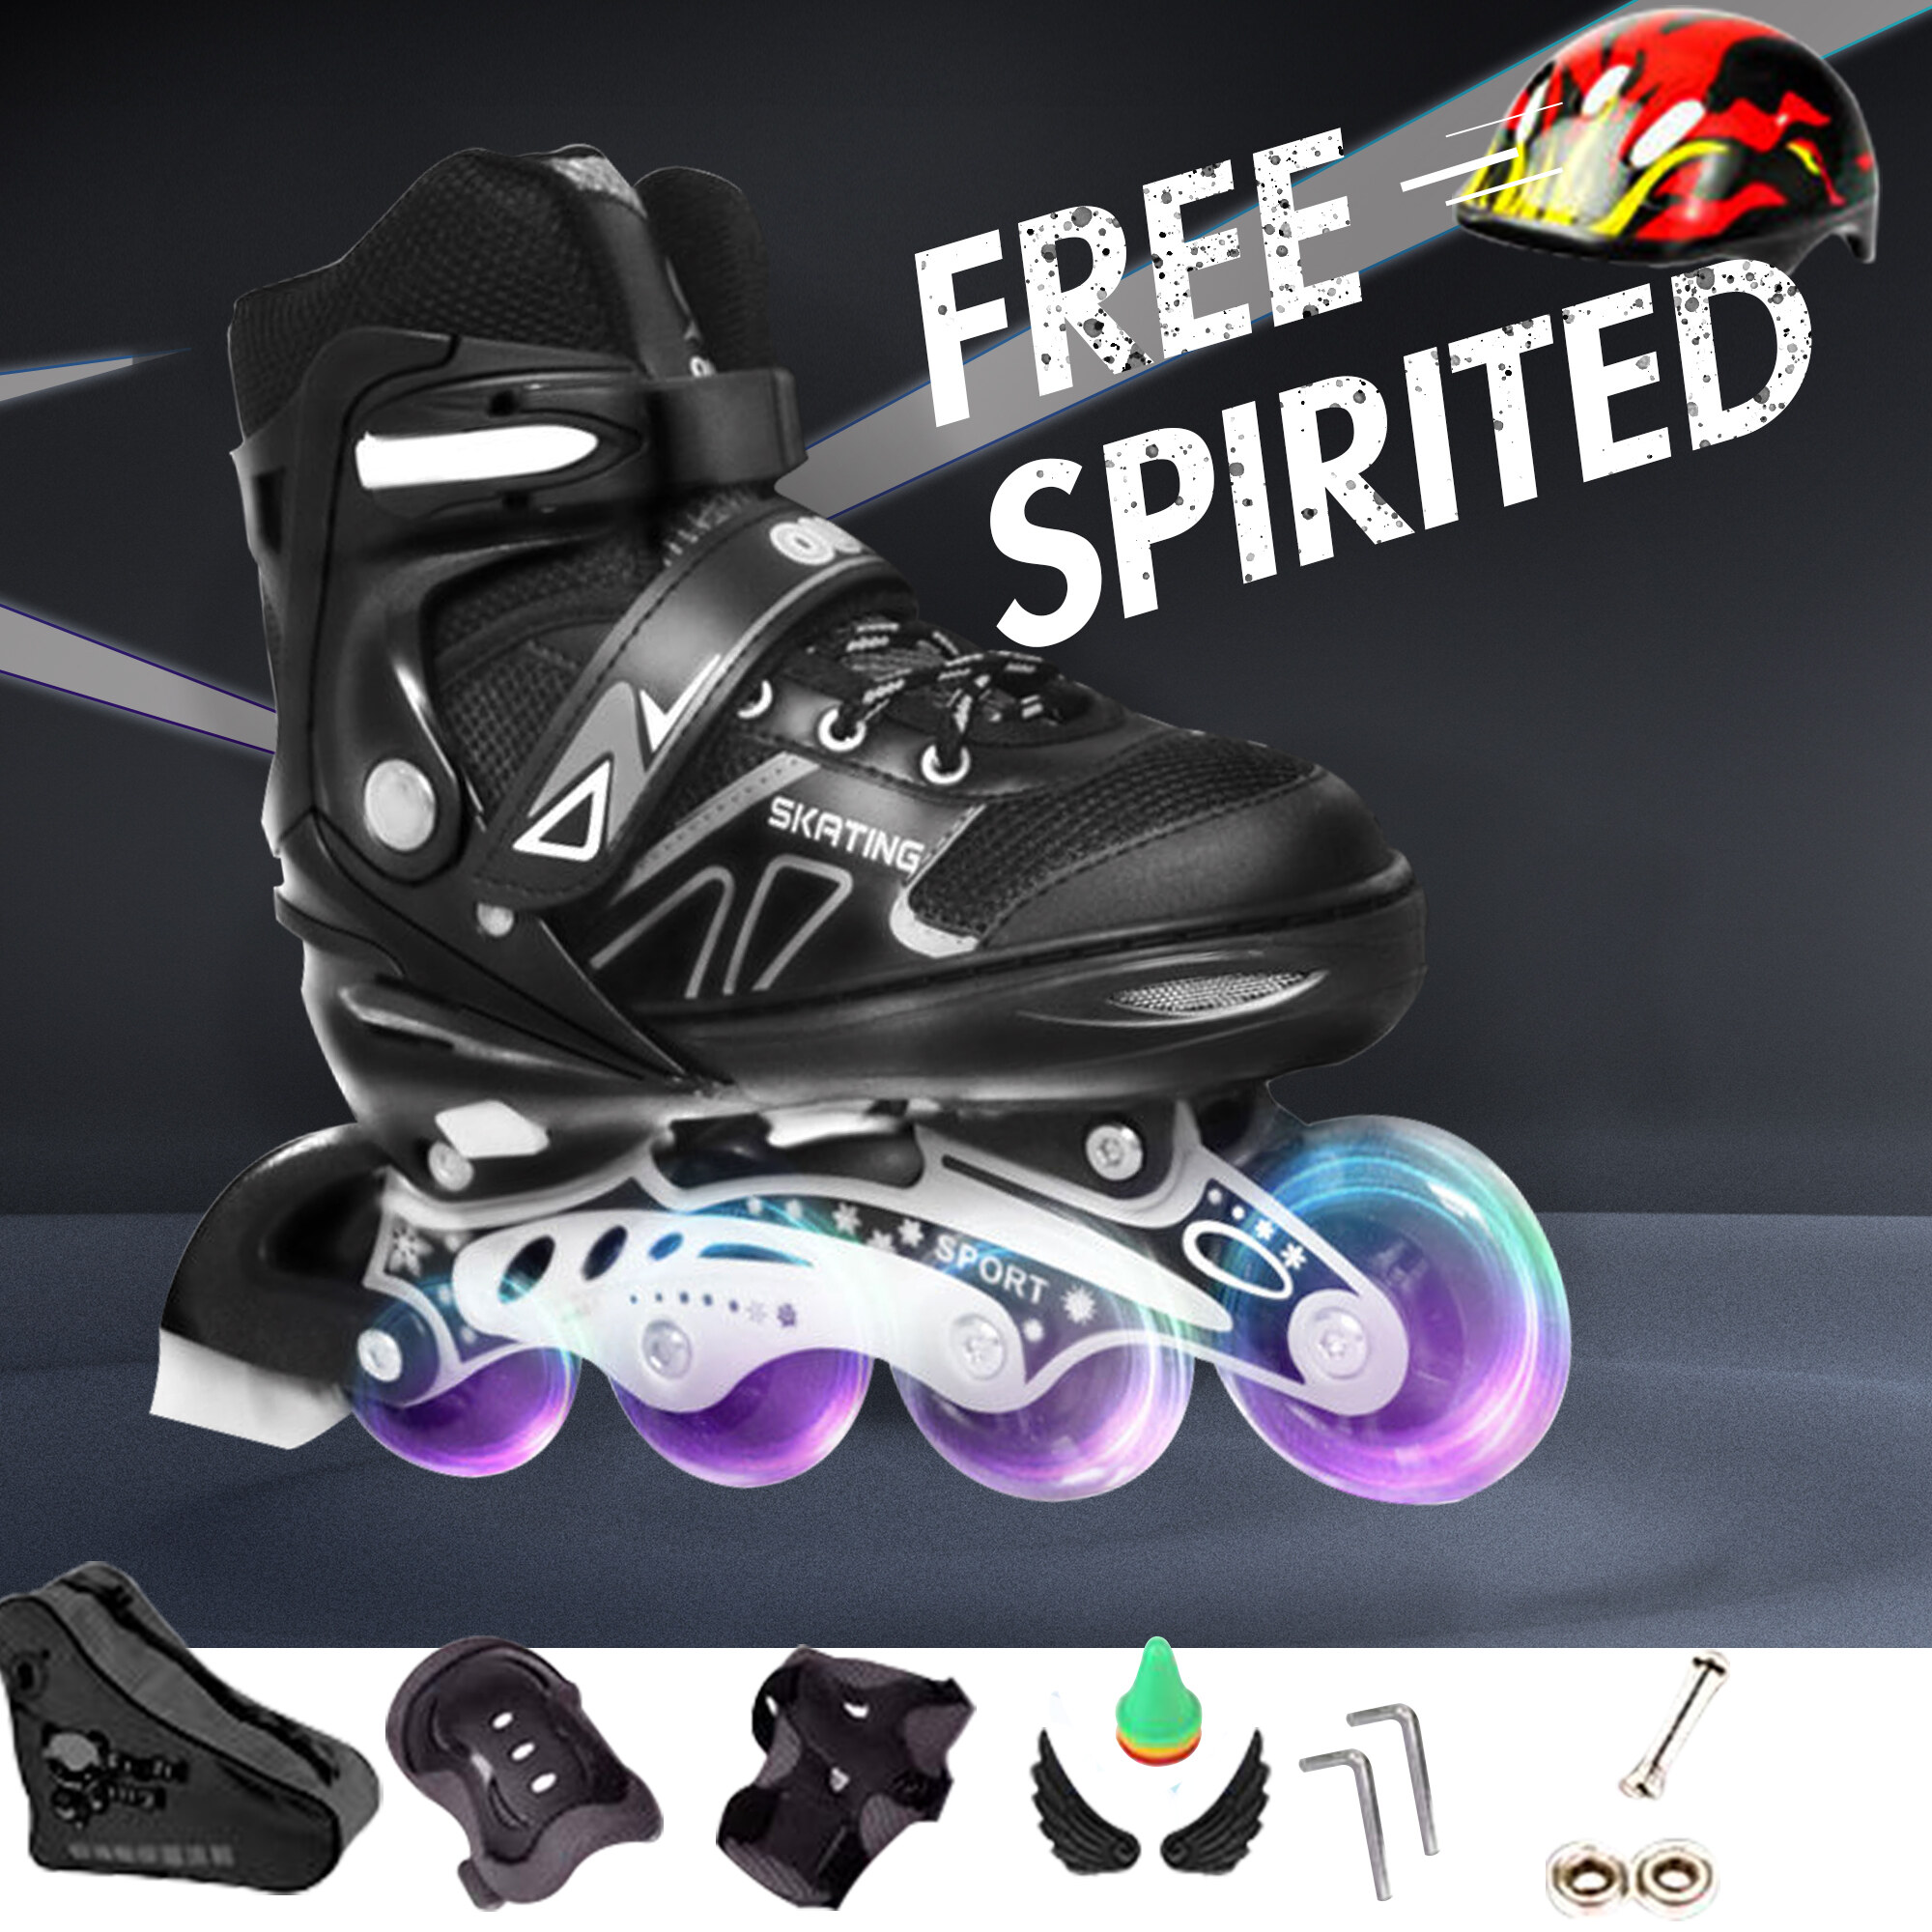 In-line Skate รองเท้าอินไลน์สเก็ต PU wheelรองเท้าสเก็ตสำหรับเด็กของเด็กหญิงและชาย โรลเลอร์สเกต อินไลน์สเก็ต size S M L